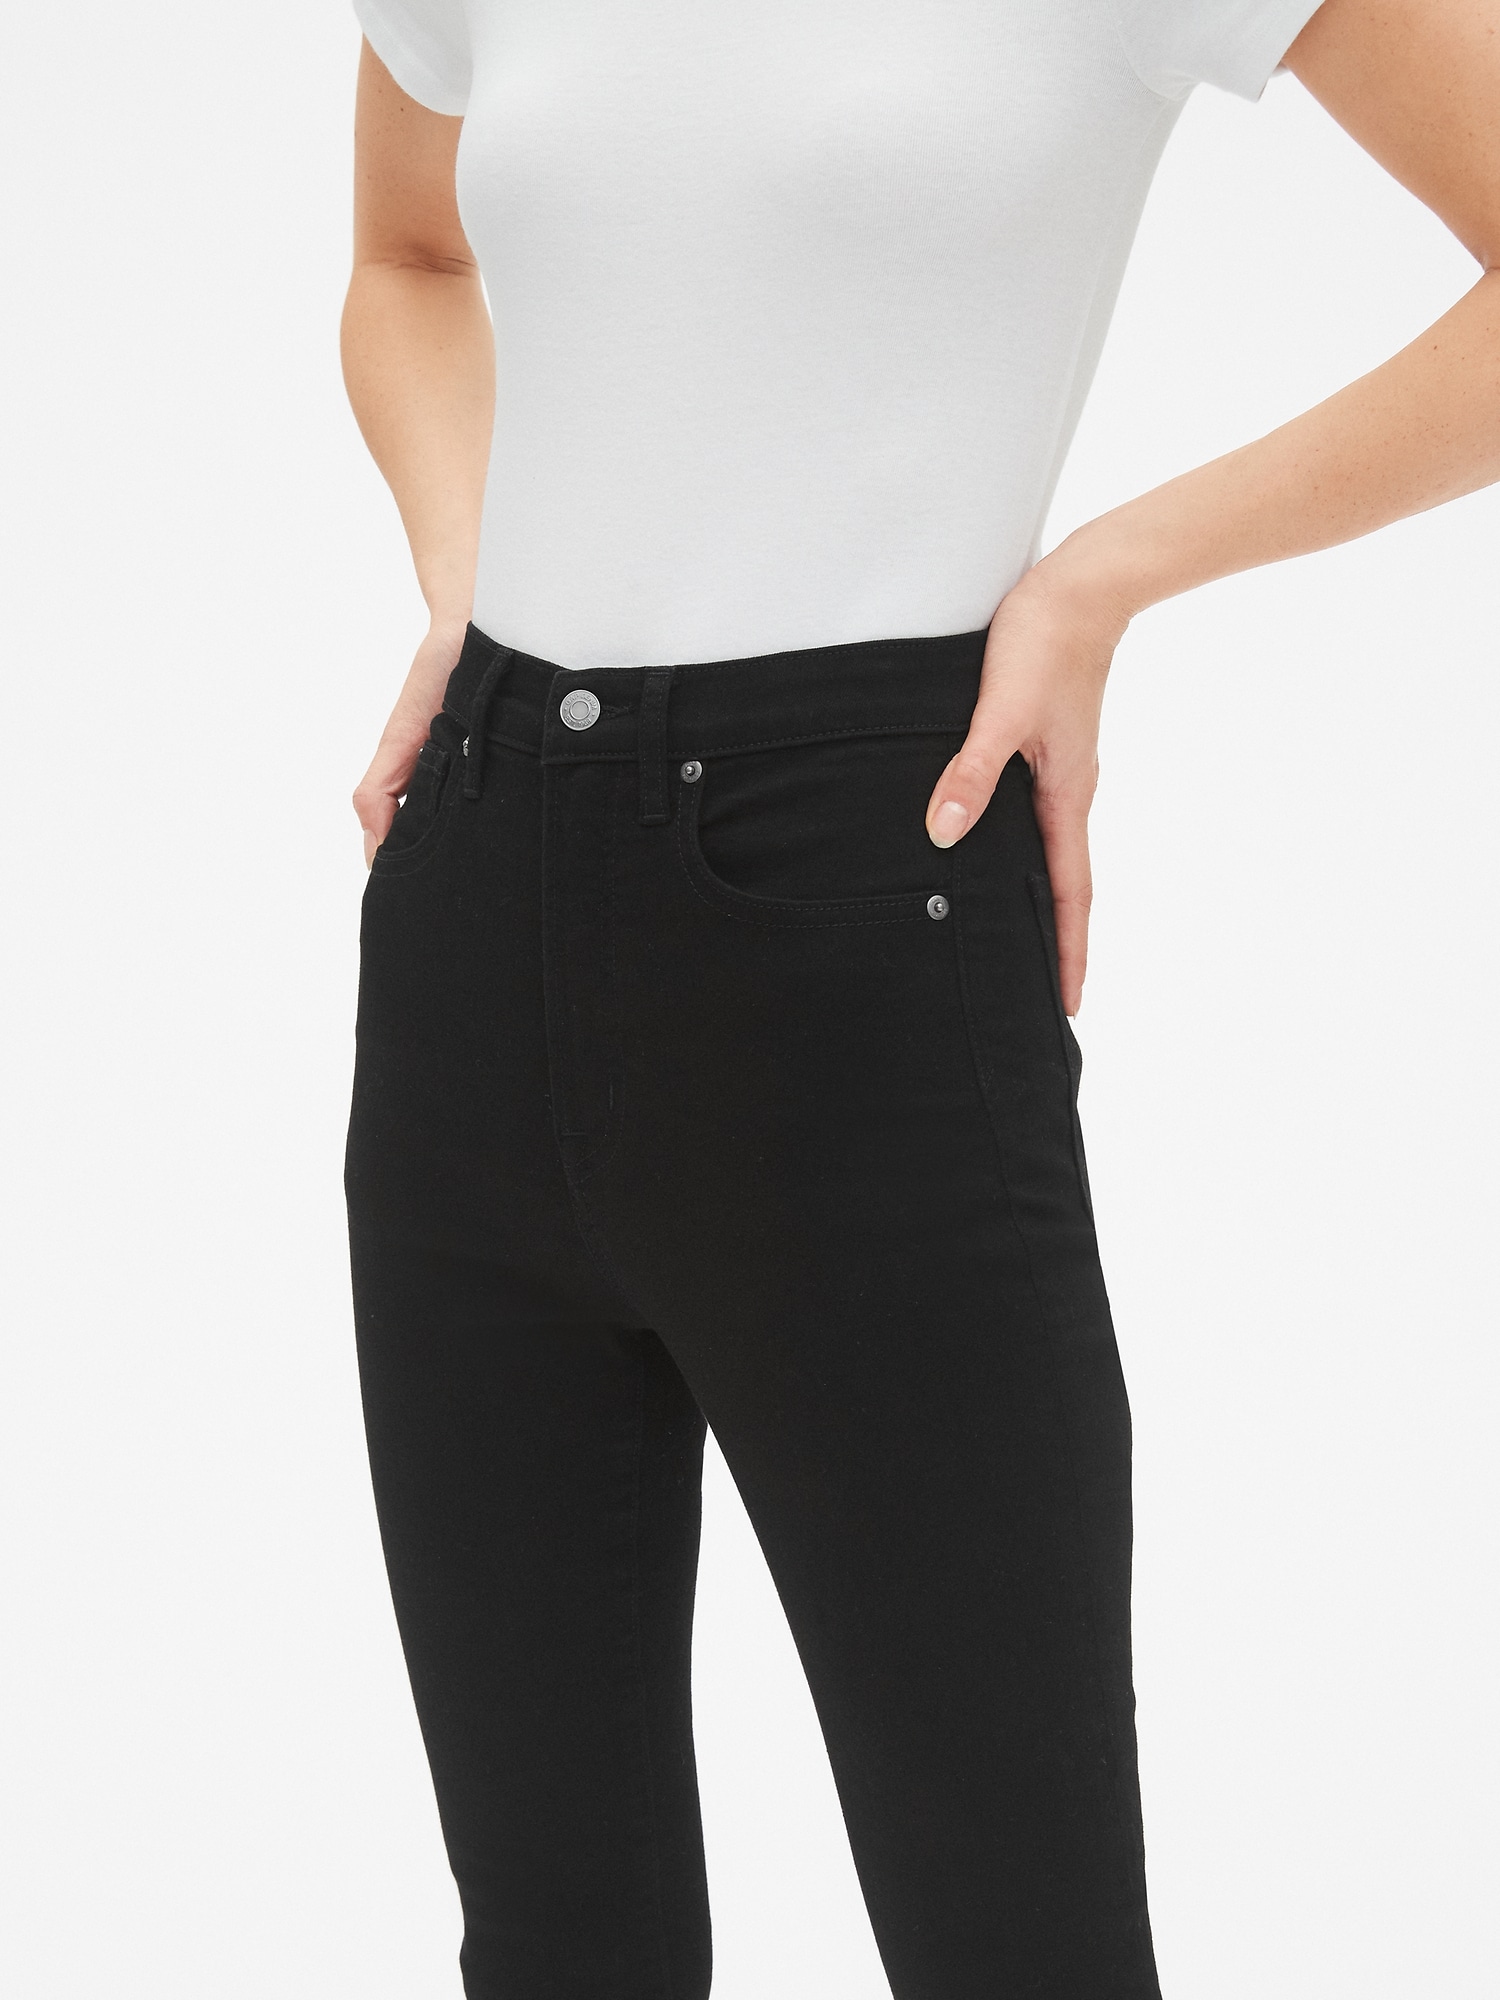 the gap black jeans